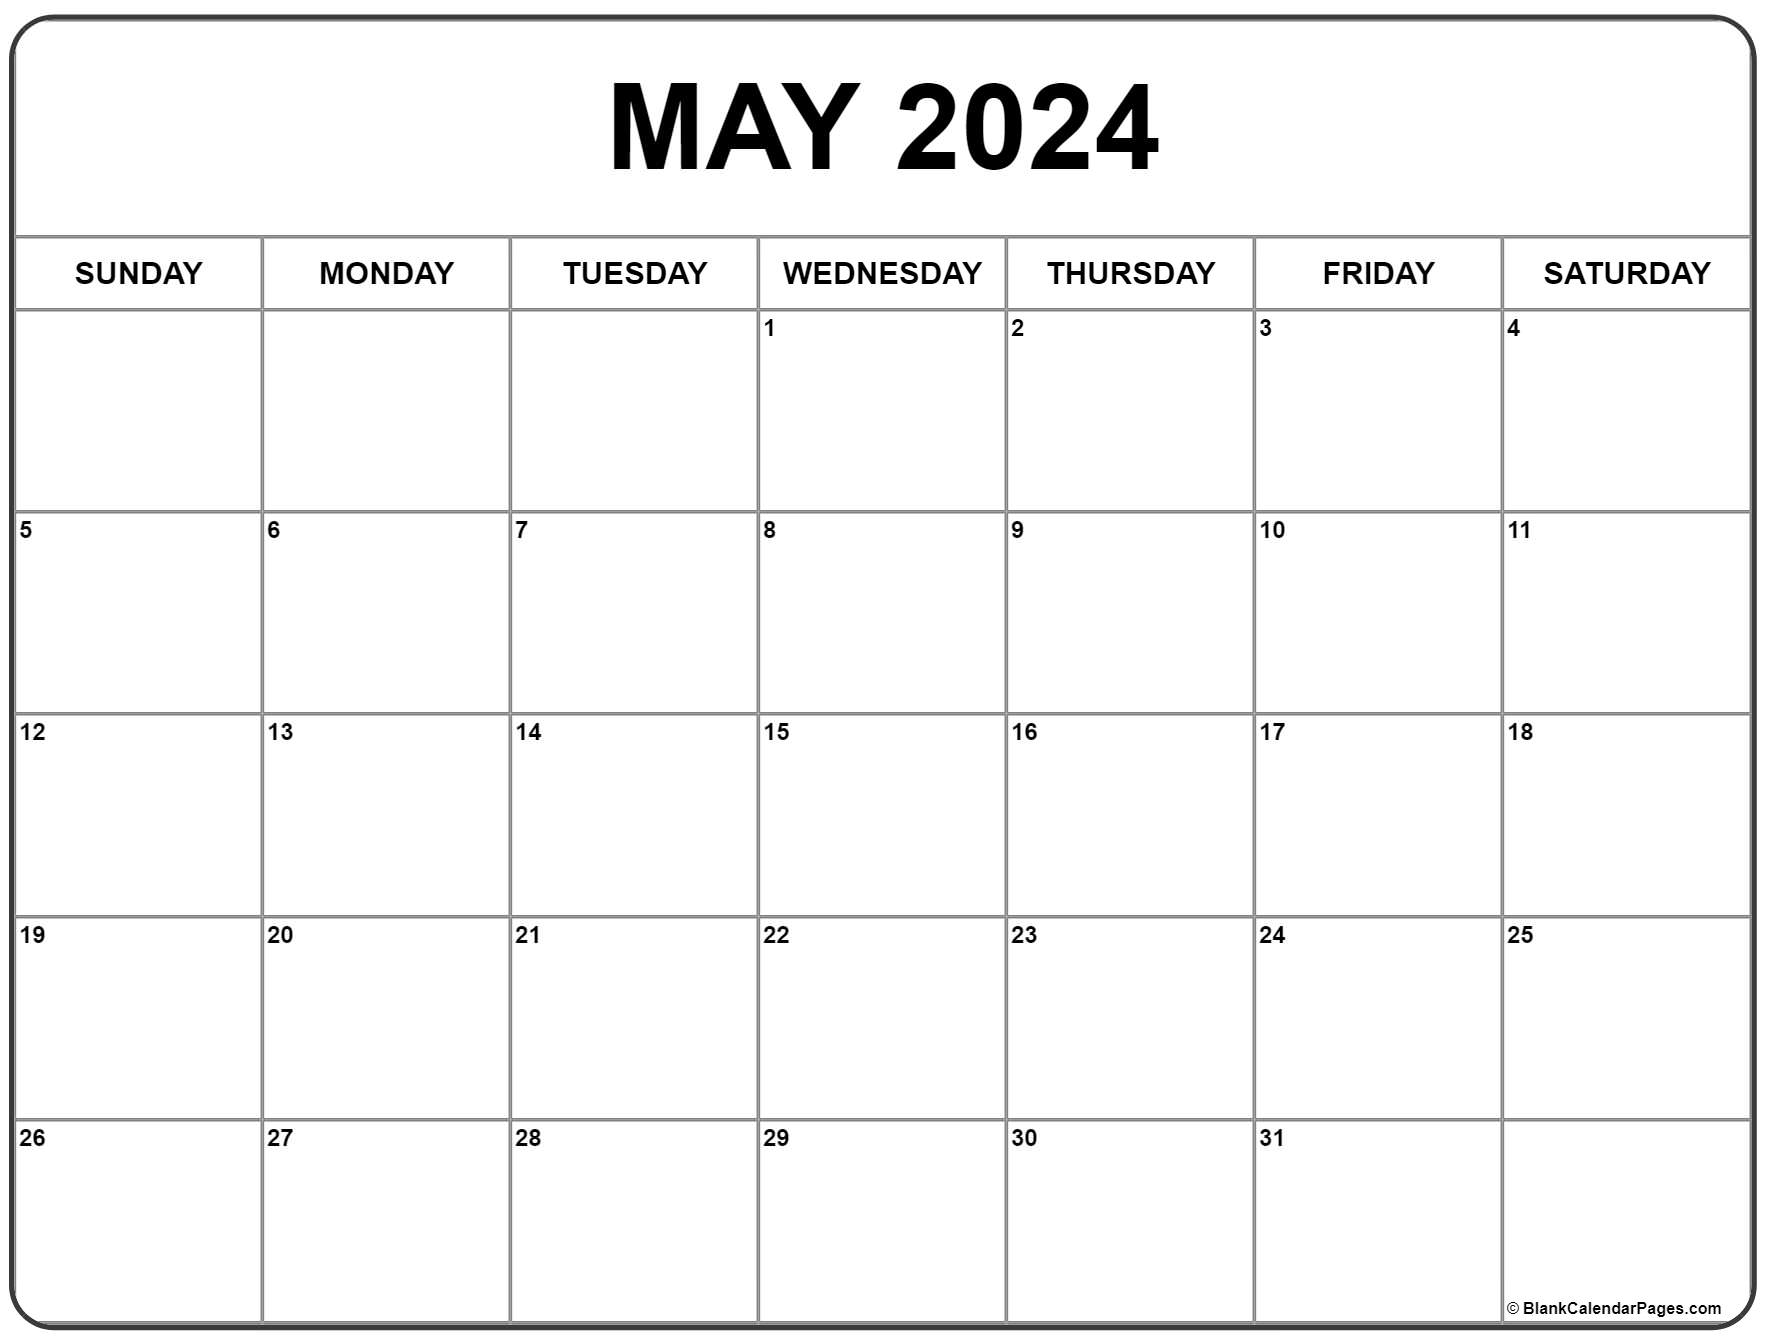 May 2024 Calendar | Free Printable Calendar for Printable Calendar Of May 2024